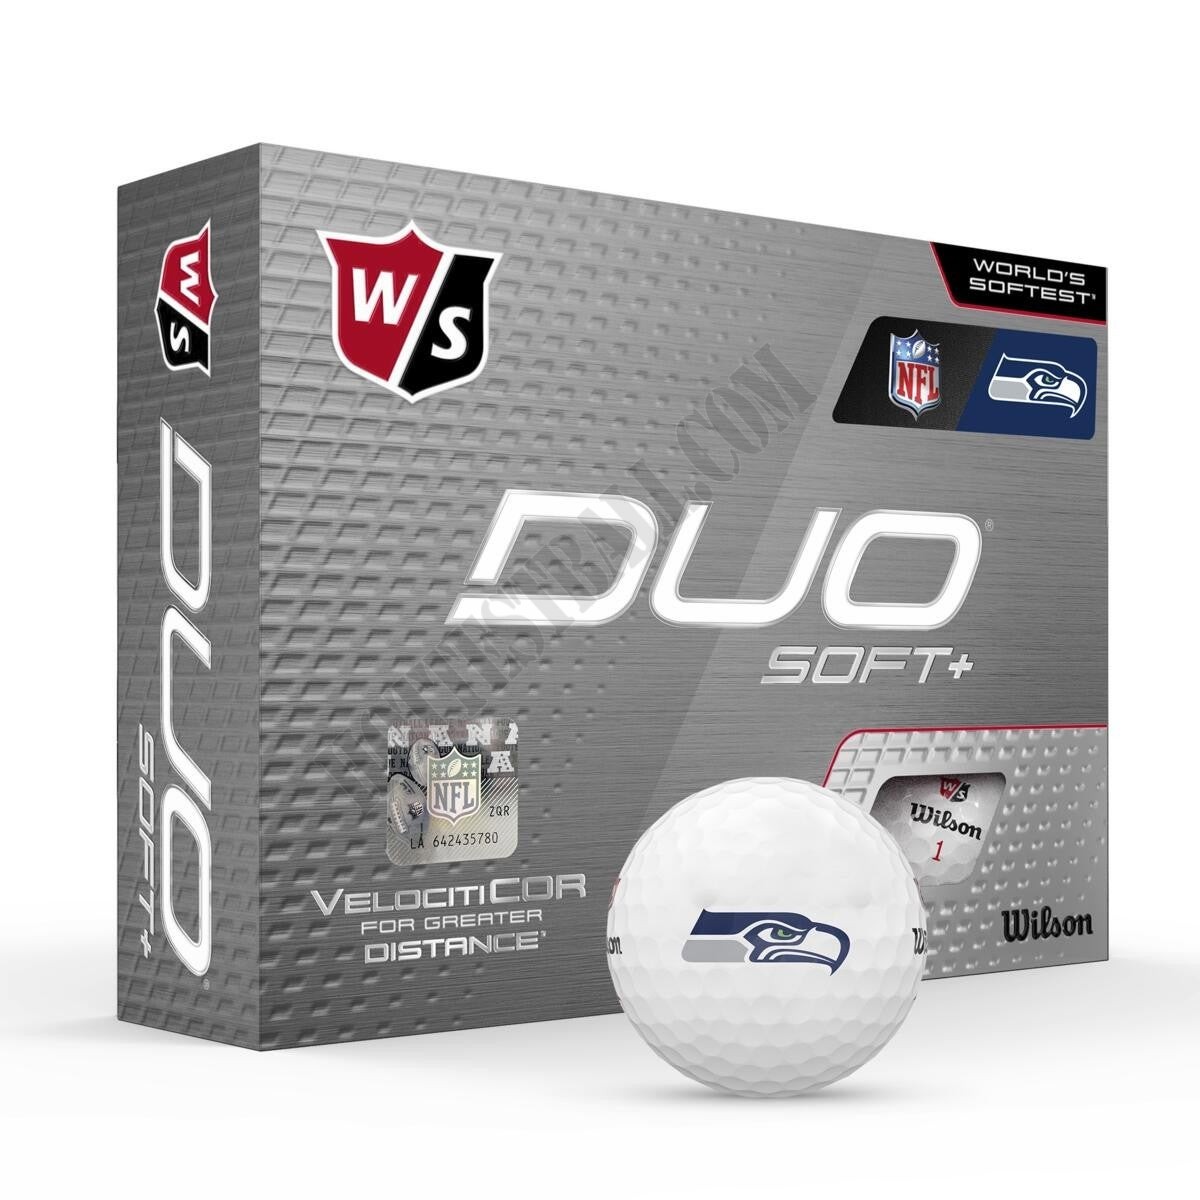 Duo Soft+ NFL Golf Balls - Seattle Seahawks ● Wilson Promotions - Duo Soft+ NFL Golf Balls - Seattle Seahawks ● Wilson Promotions